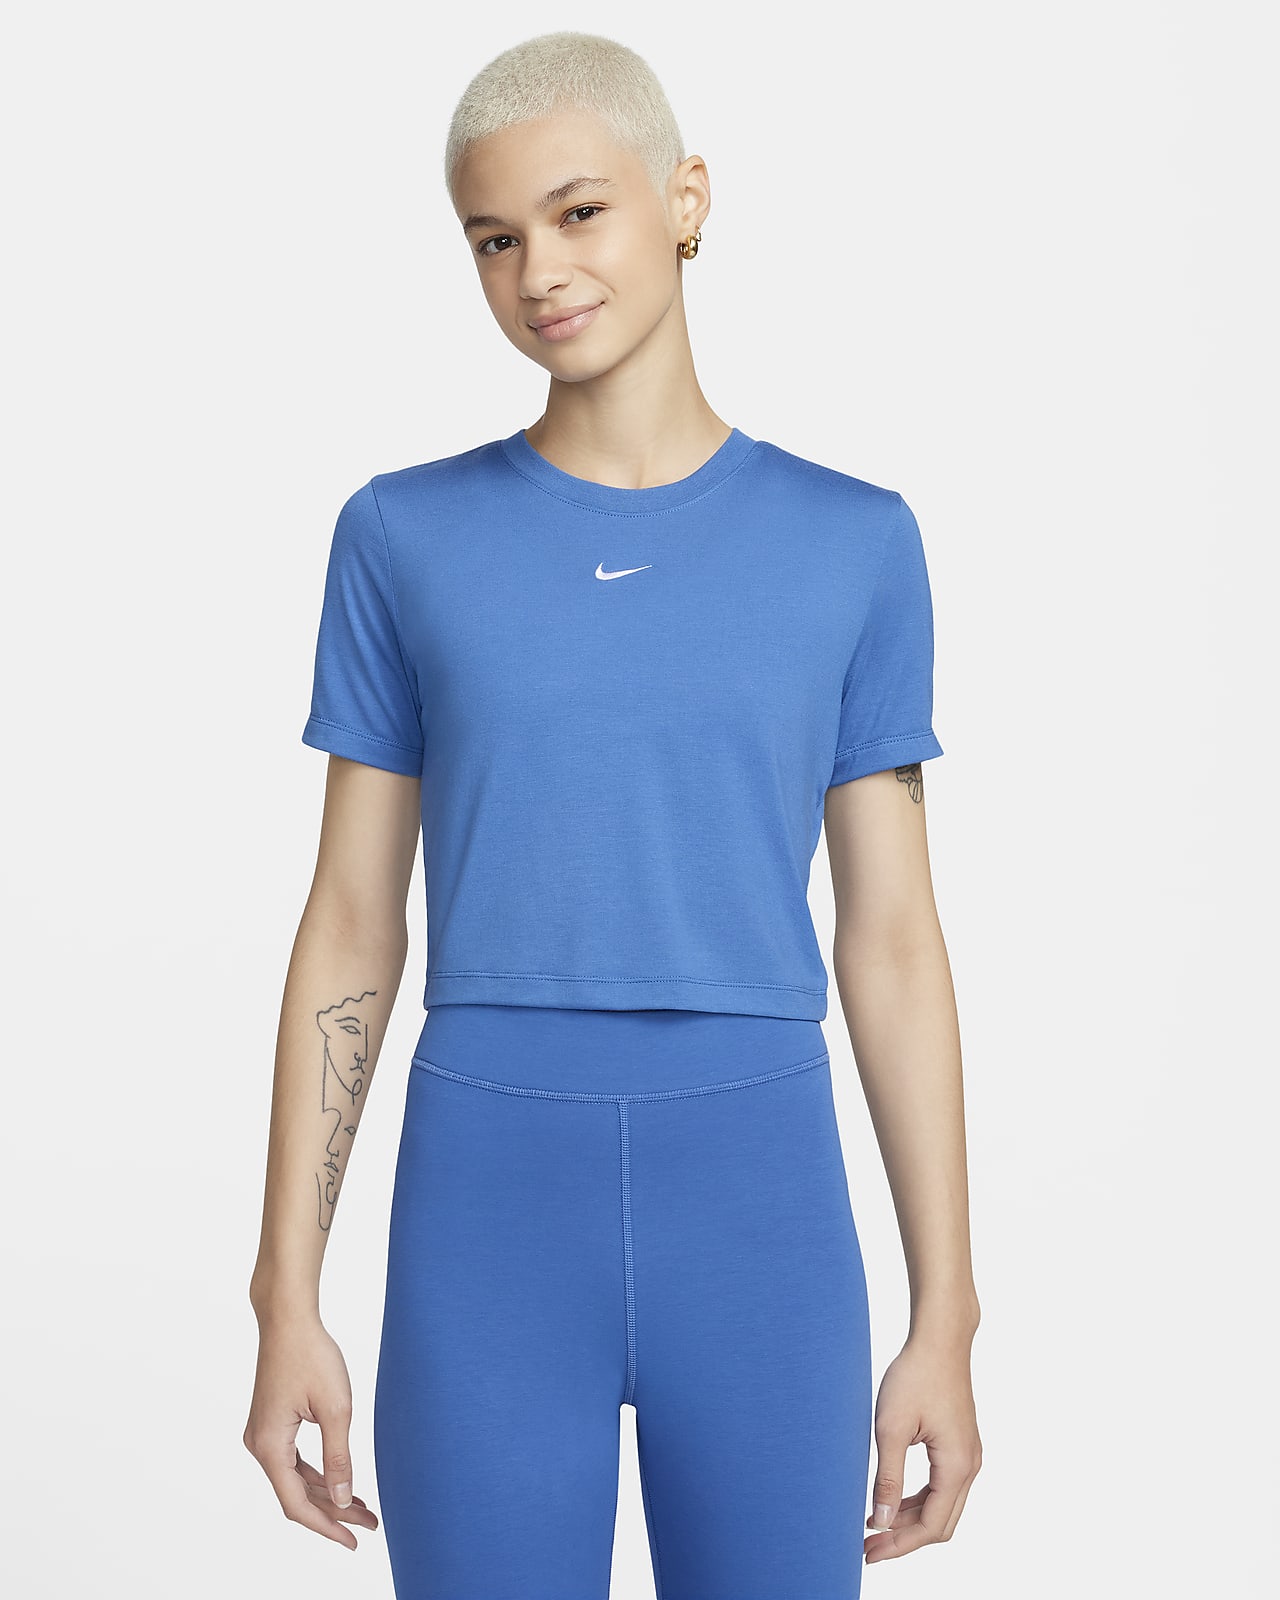 Cropped Nike Sportswear T-Shirt. Essential Slim Women\'s